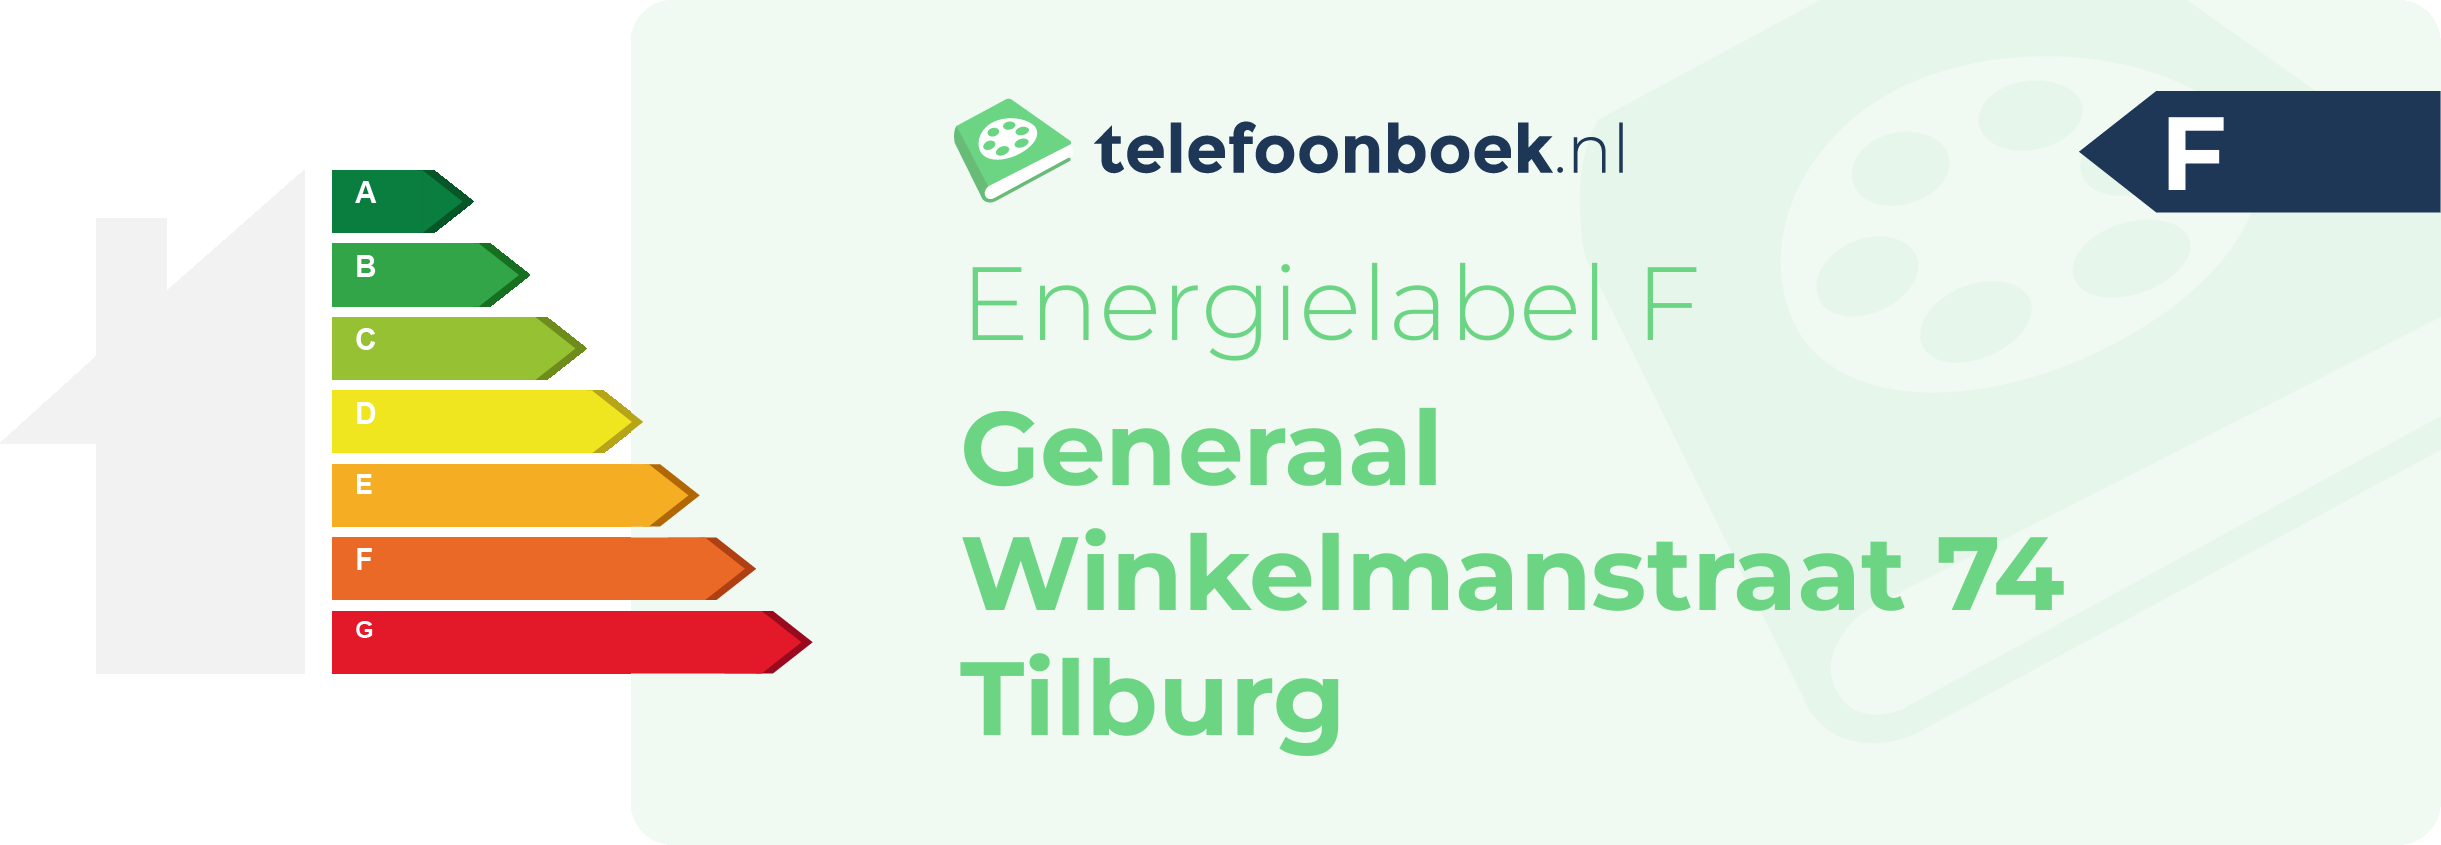 Energielabel Generaal Winkelmanstraat 74 Tilburg